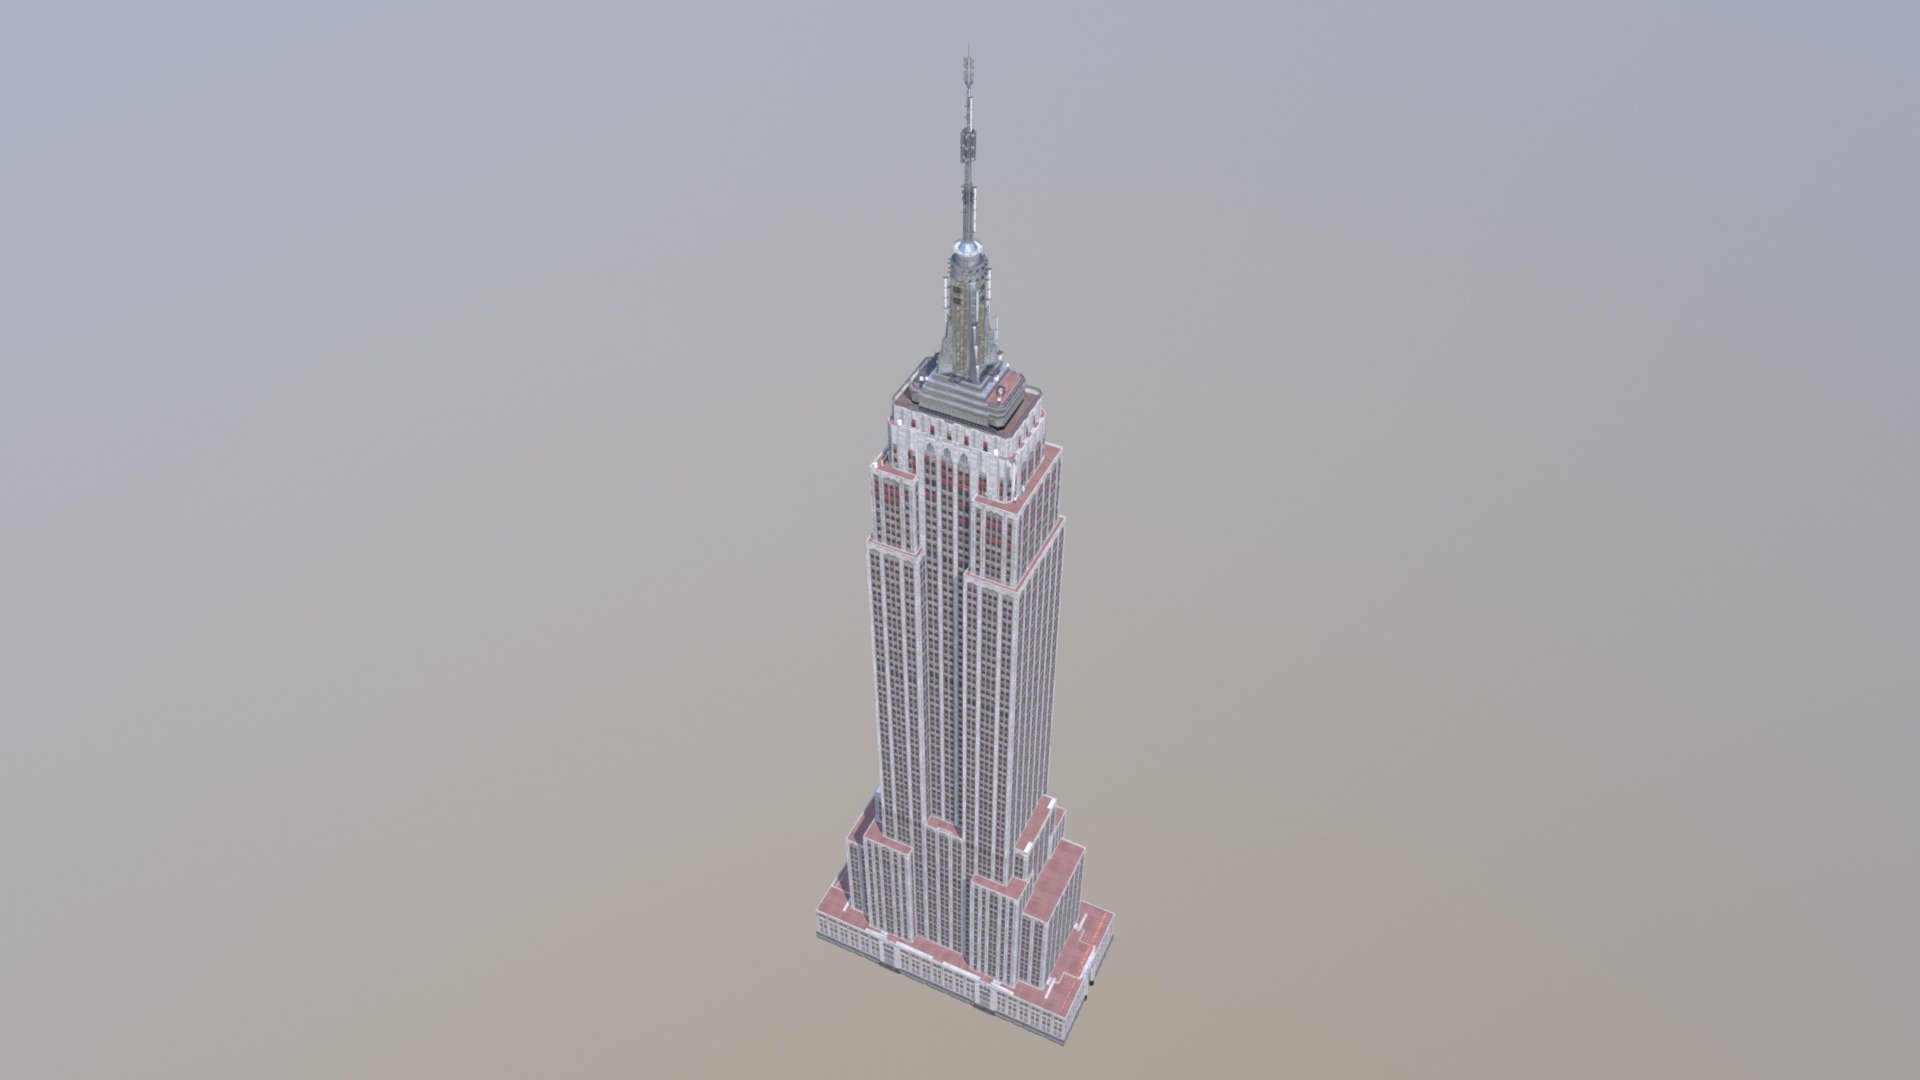 https://steamcommunity.com/sharedfiles/filedetails/?id=626845833 - The Empire State Building - 3D model by BoldlyBuilding (@TitanicKyle) 3d model